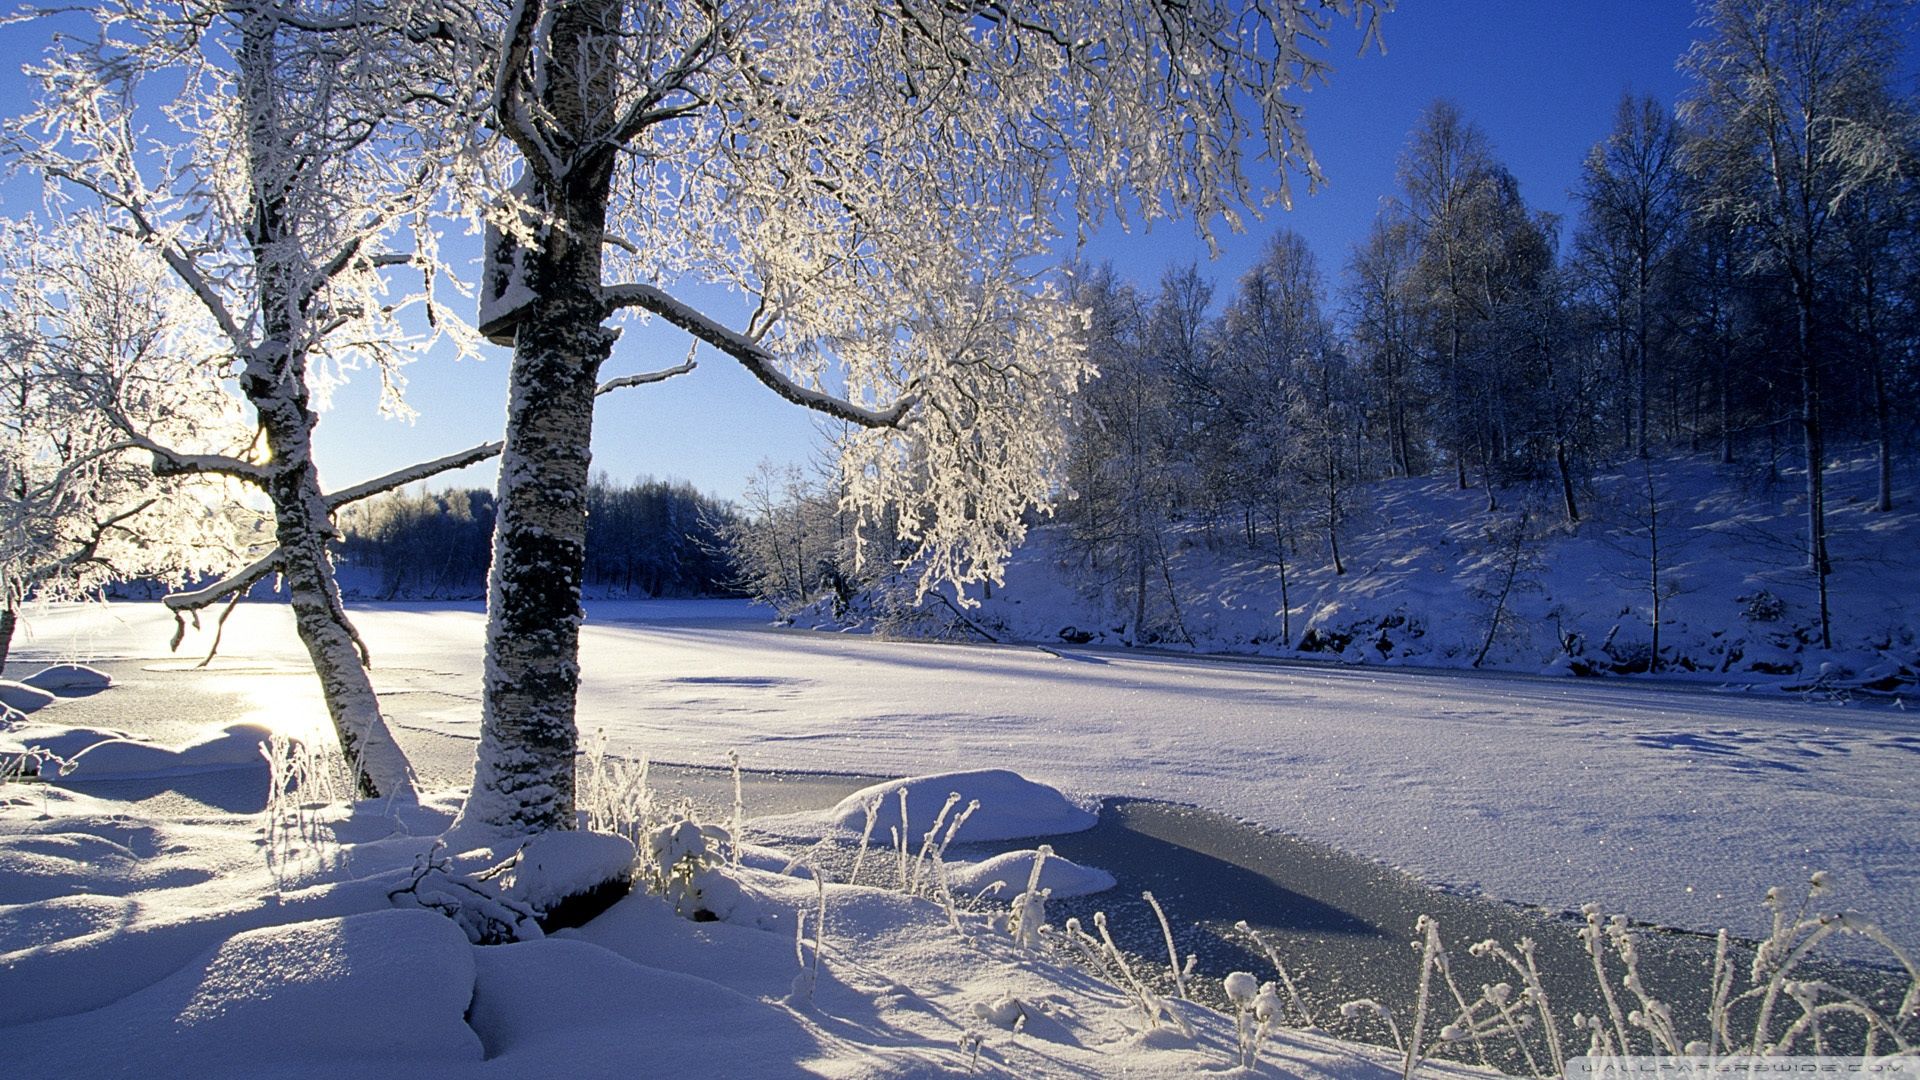 Frozen River, Winter Ultra HD Desktop Background Wallpaper for 4K UHD TV, Tablet